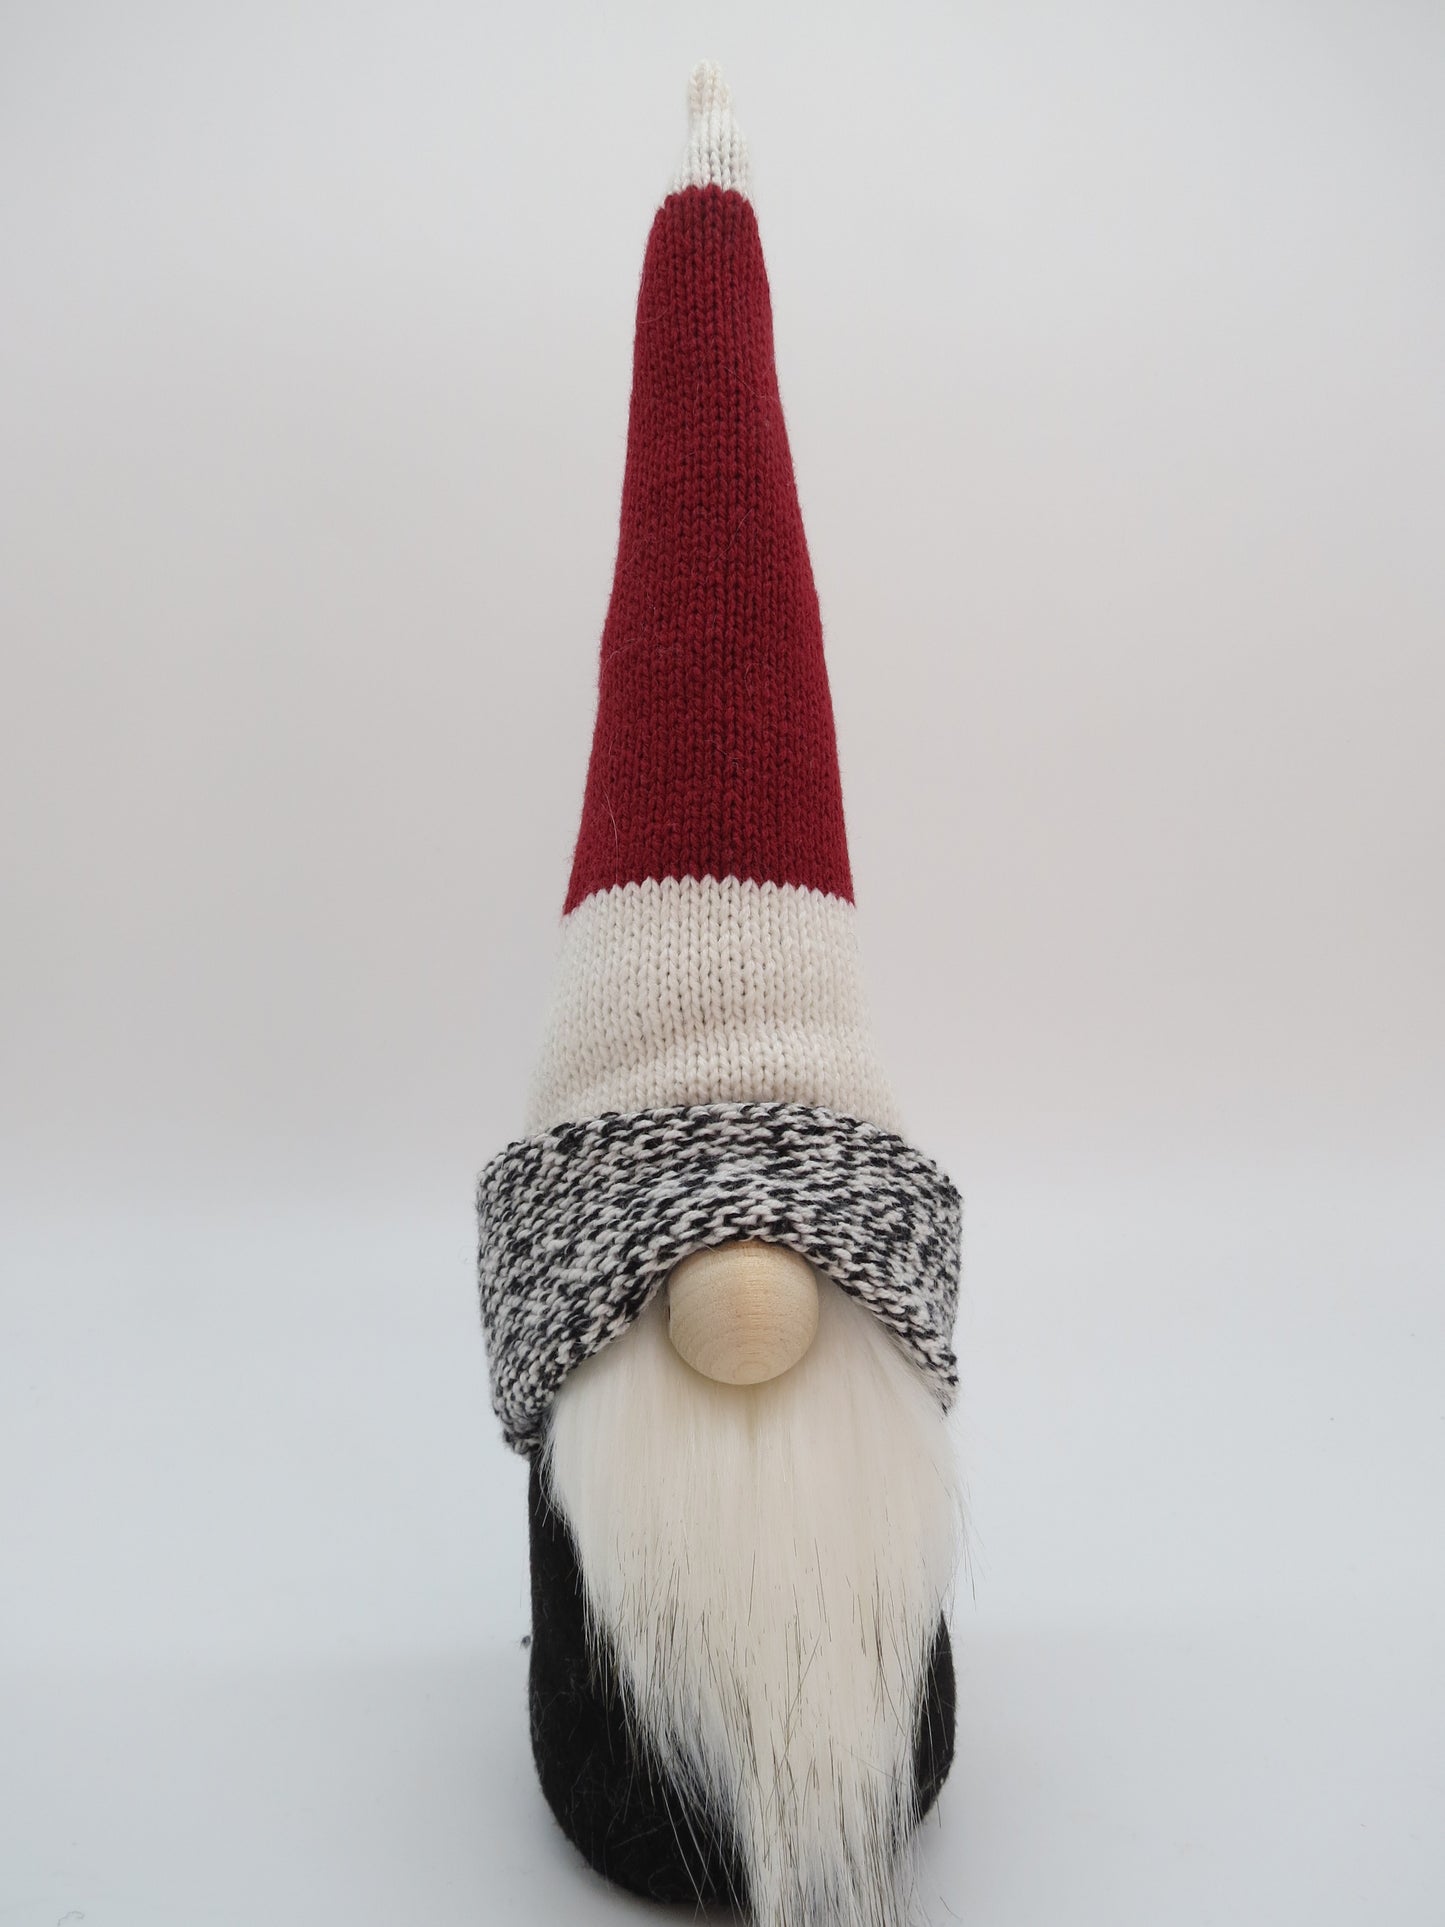 15" Medium Gnome (5797) - Red/White/Black Stripes